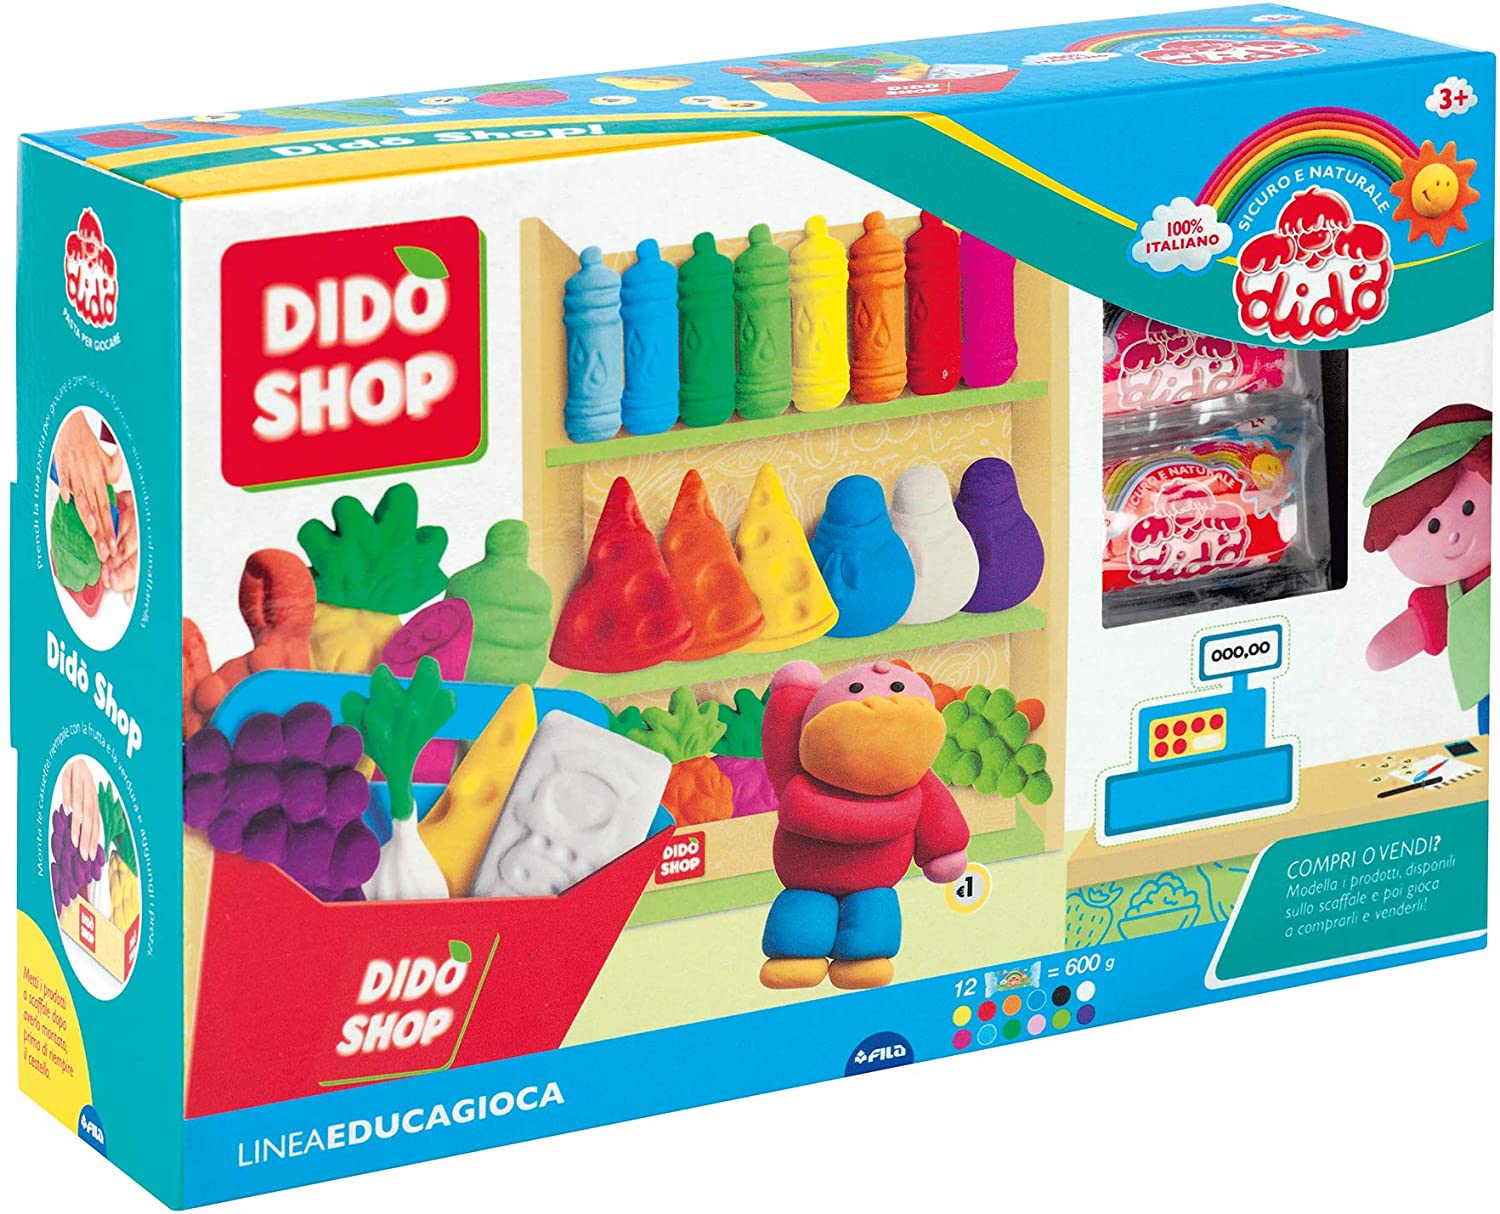 Dido Shop toysvaldichiana.it 